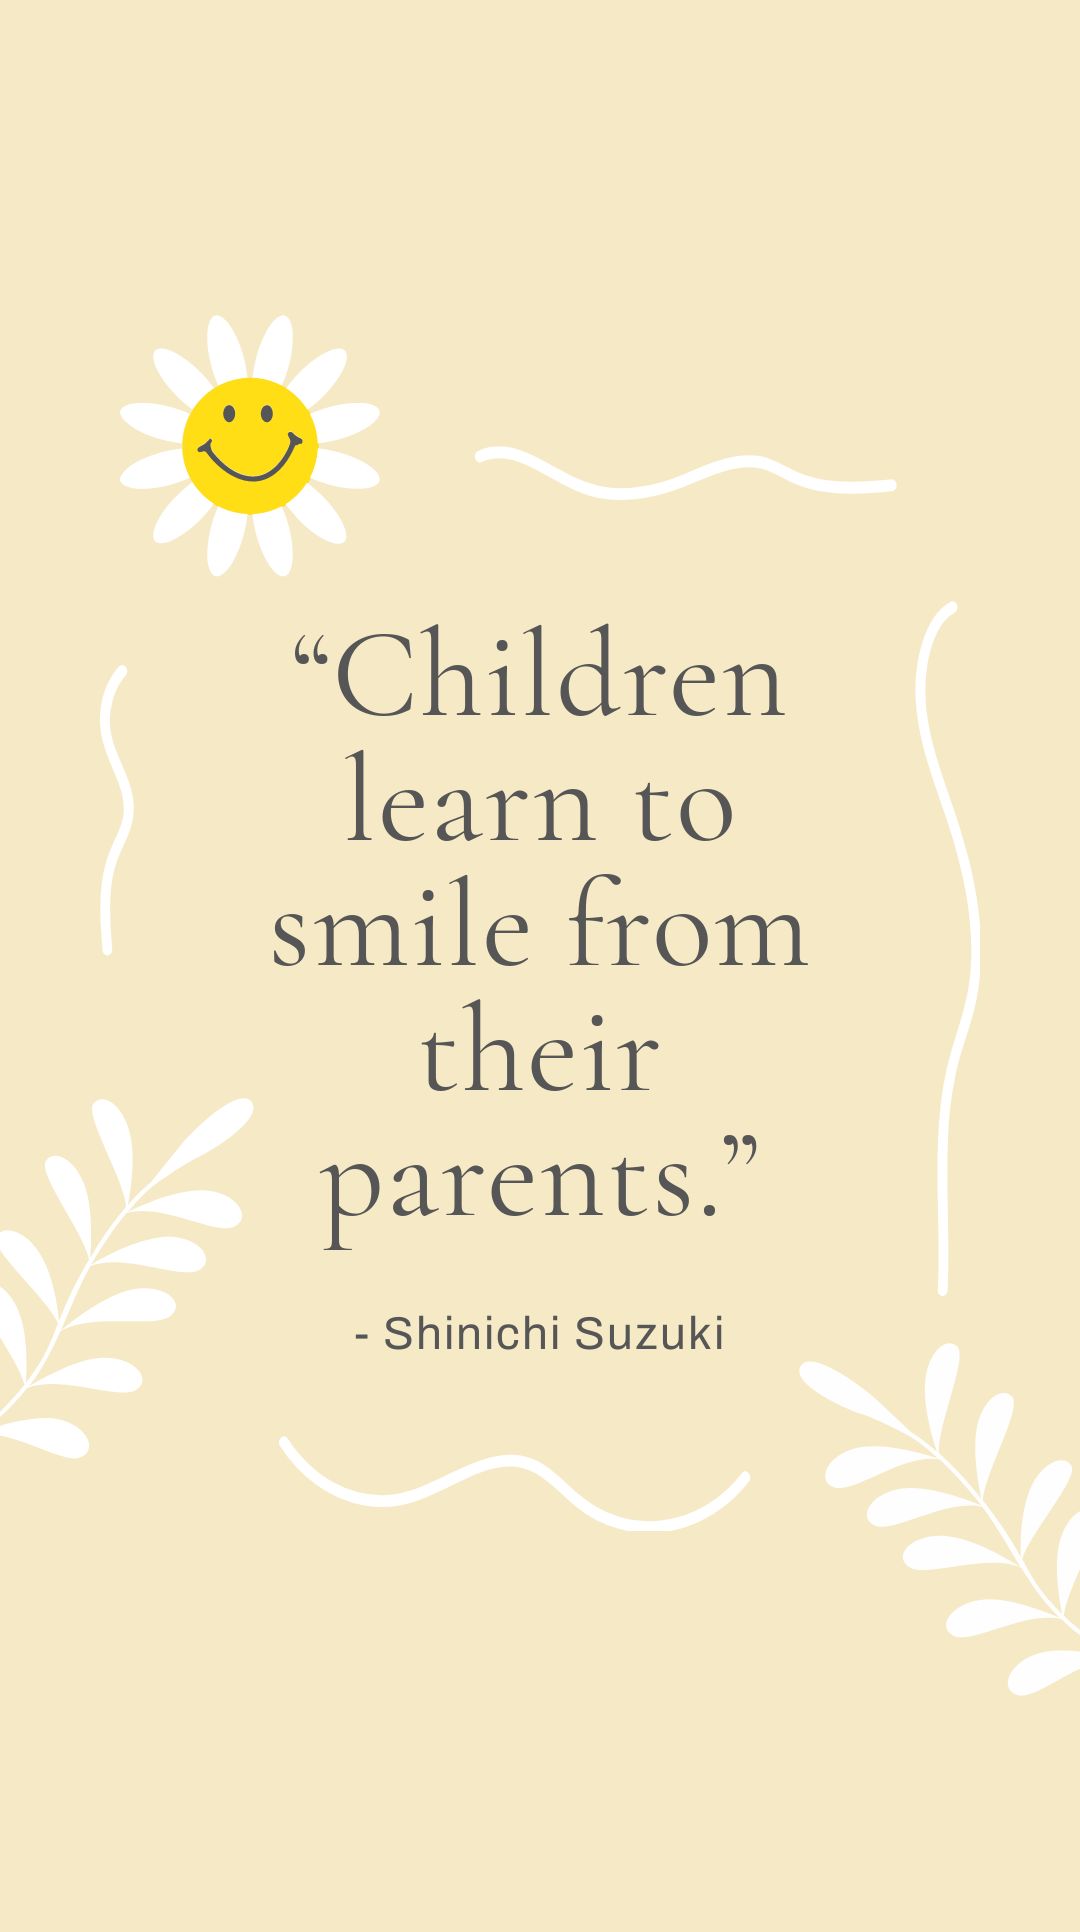 Free Shinichi Suzuki - “Children learn to smile from their parents.”